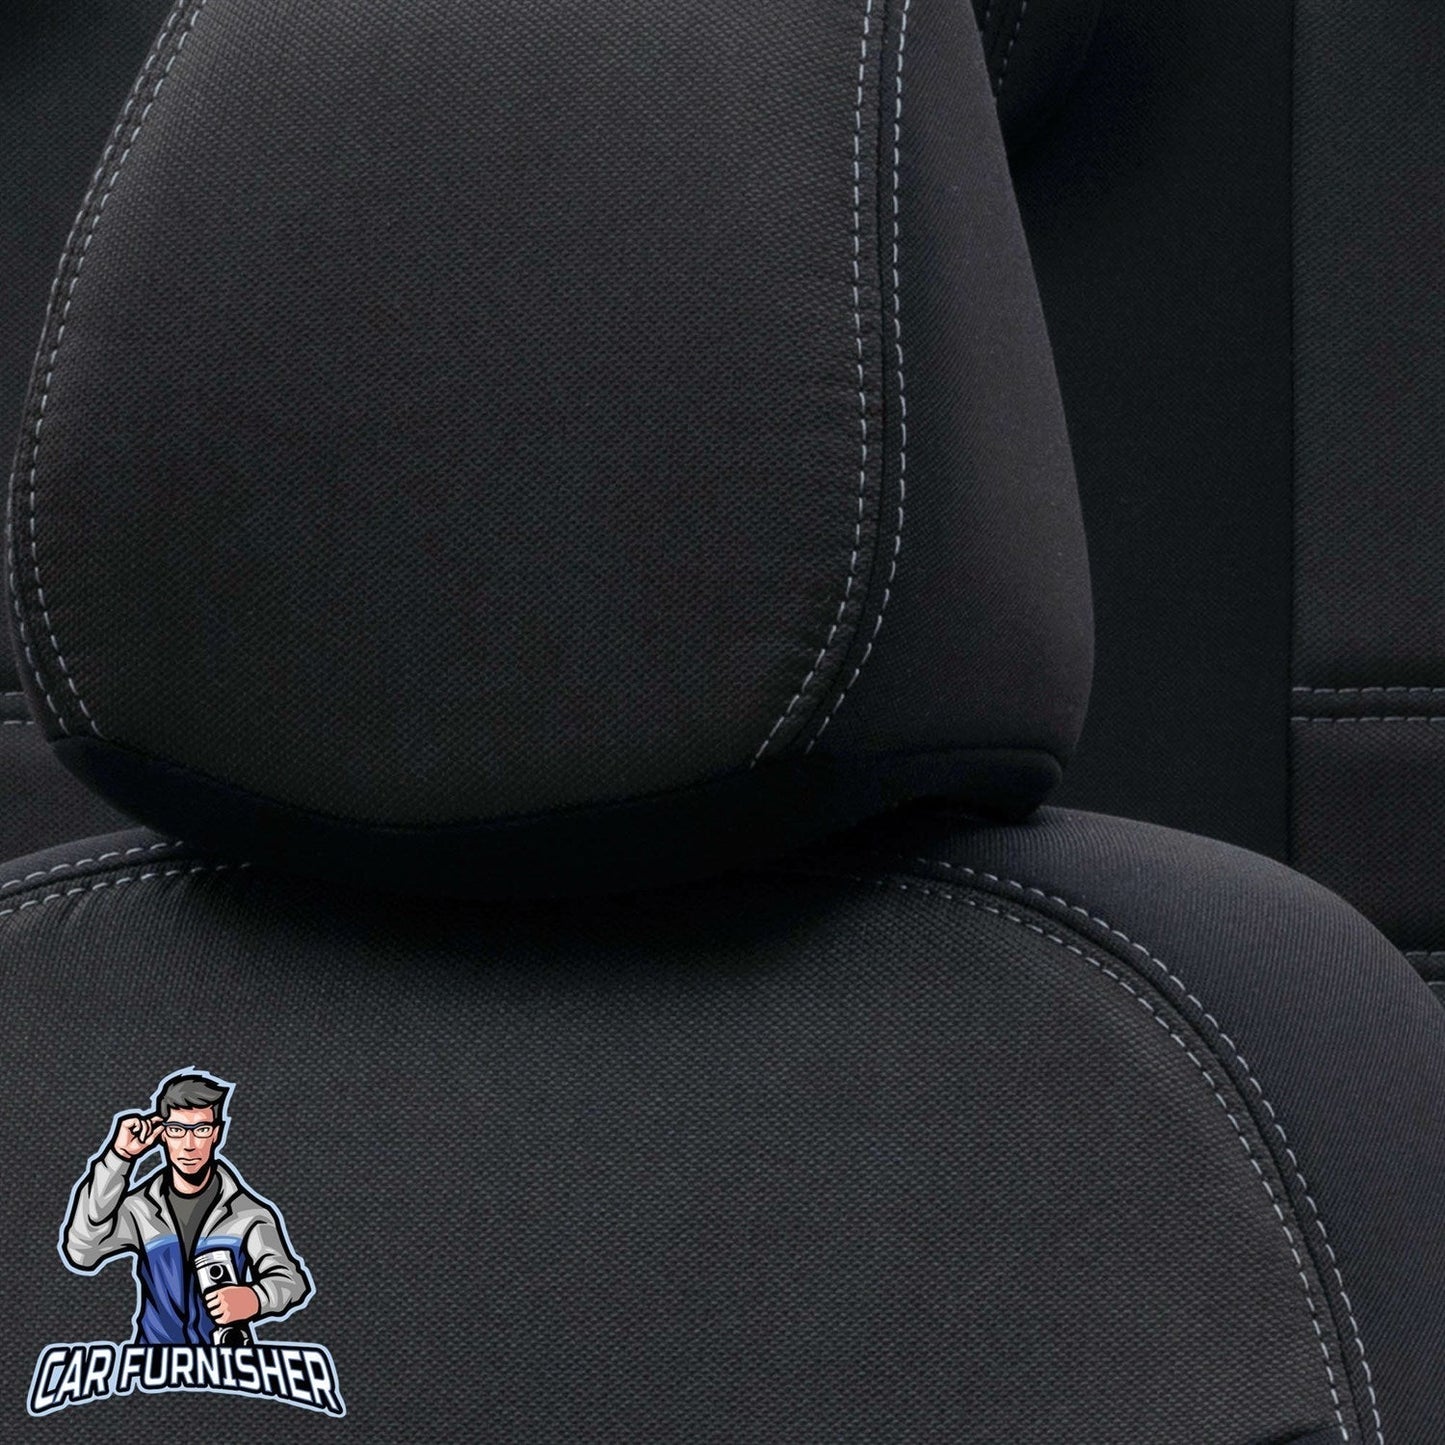 Iveco Stralis Seat Cover Original Jacquard Design Black Front Seats (2 Seats + Handrest + Headrests) Jacquard Fabric